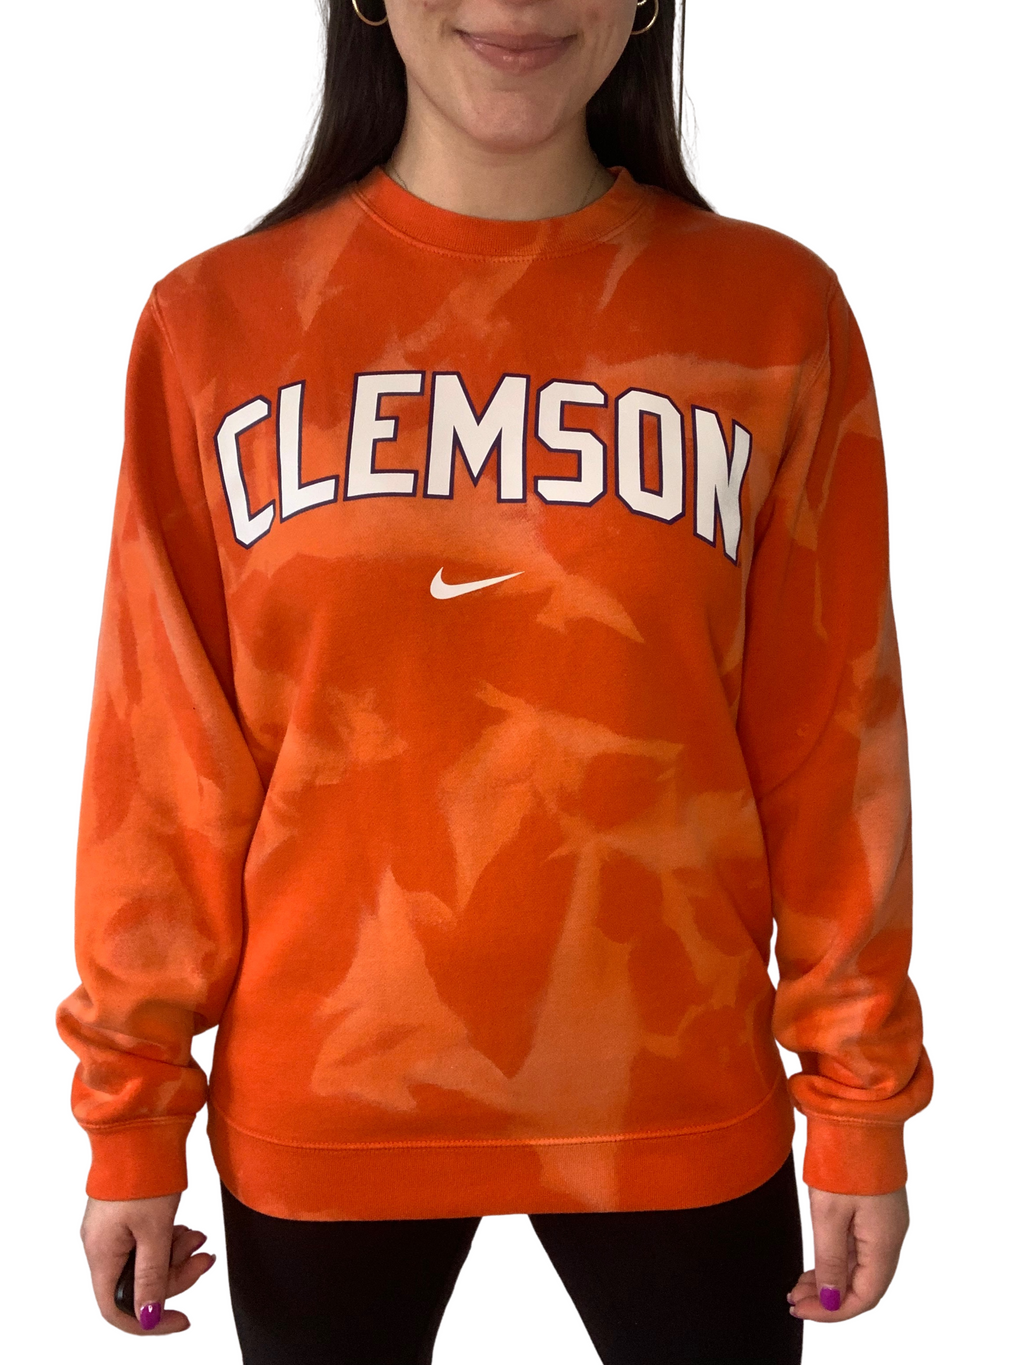 Clemson Bleached Sweatshirt